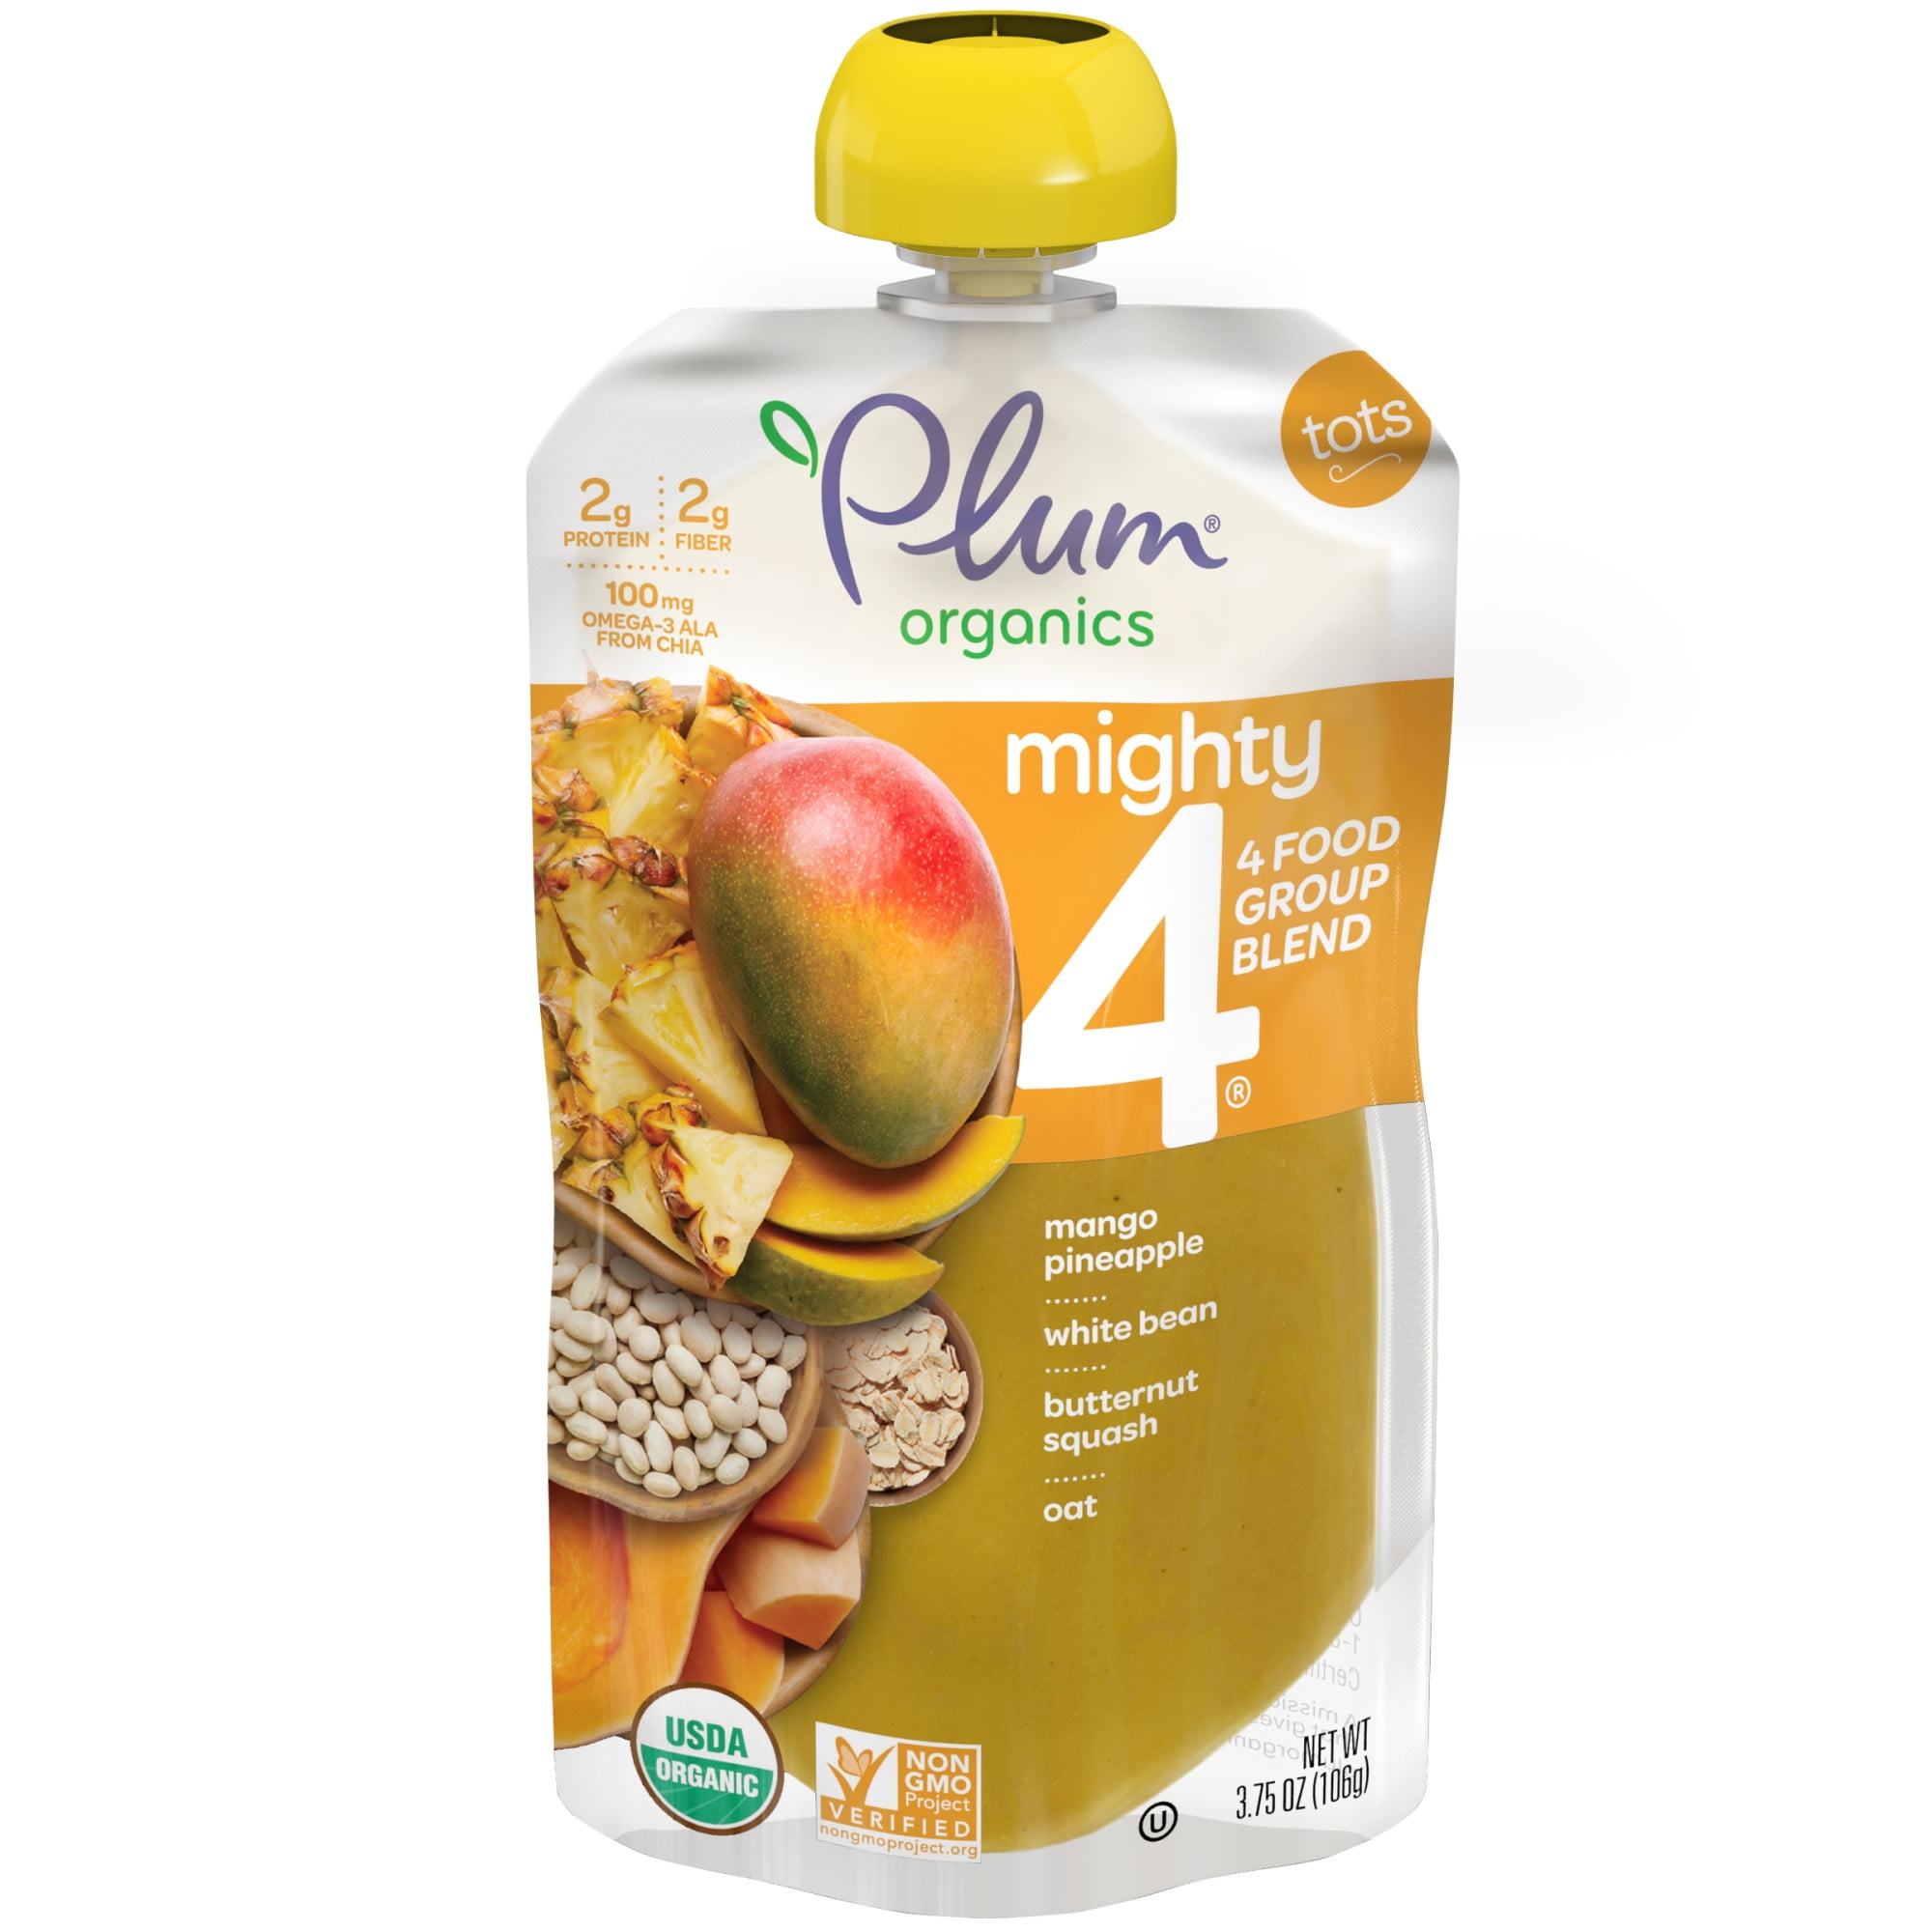 Plum Organics Mighty 4 Toddler Food Pouch: Mango, Pineapple, White Bean, Butternut Squash, Oat - 3.75 oz, Baby Food